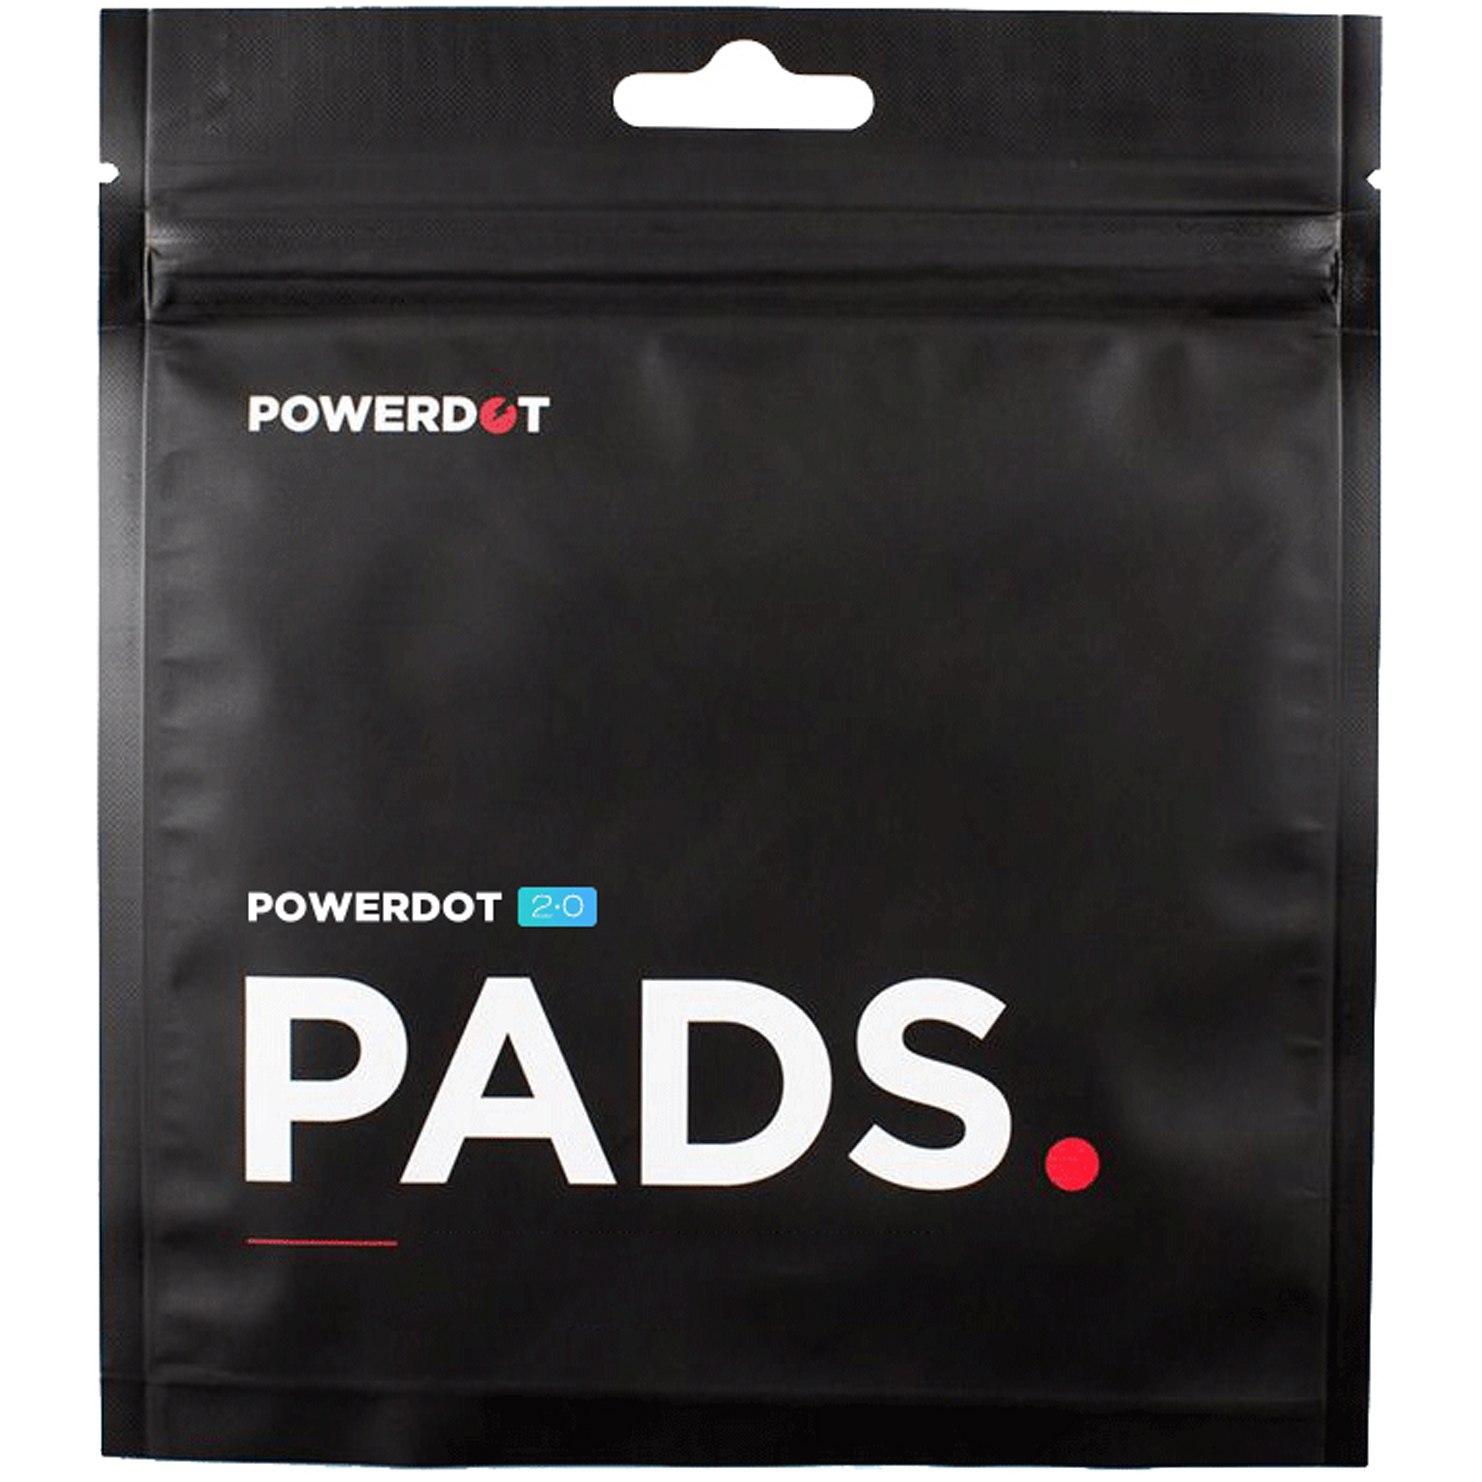 Productfoto van Powerdot 2.0 Pads - red